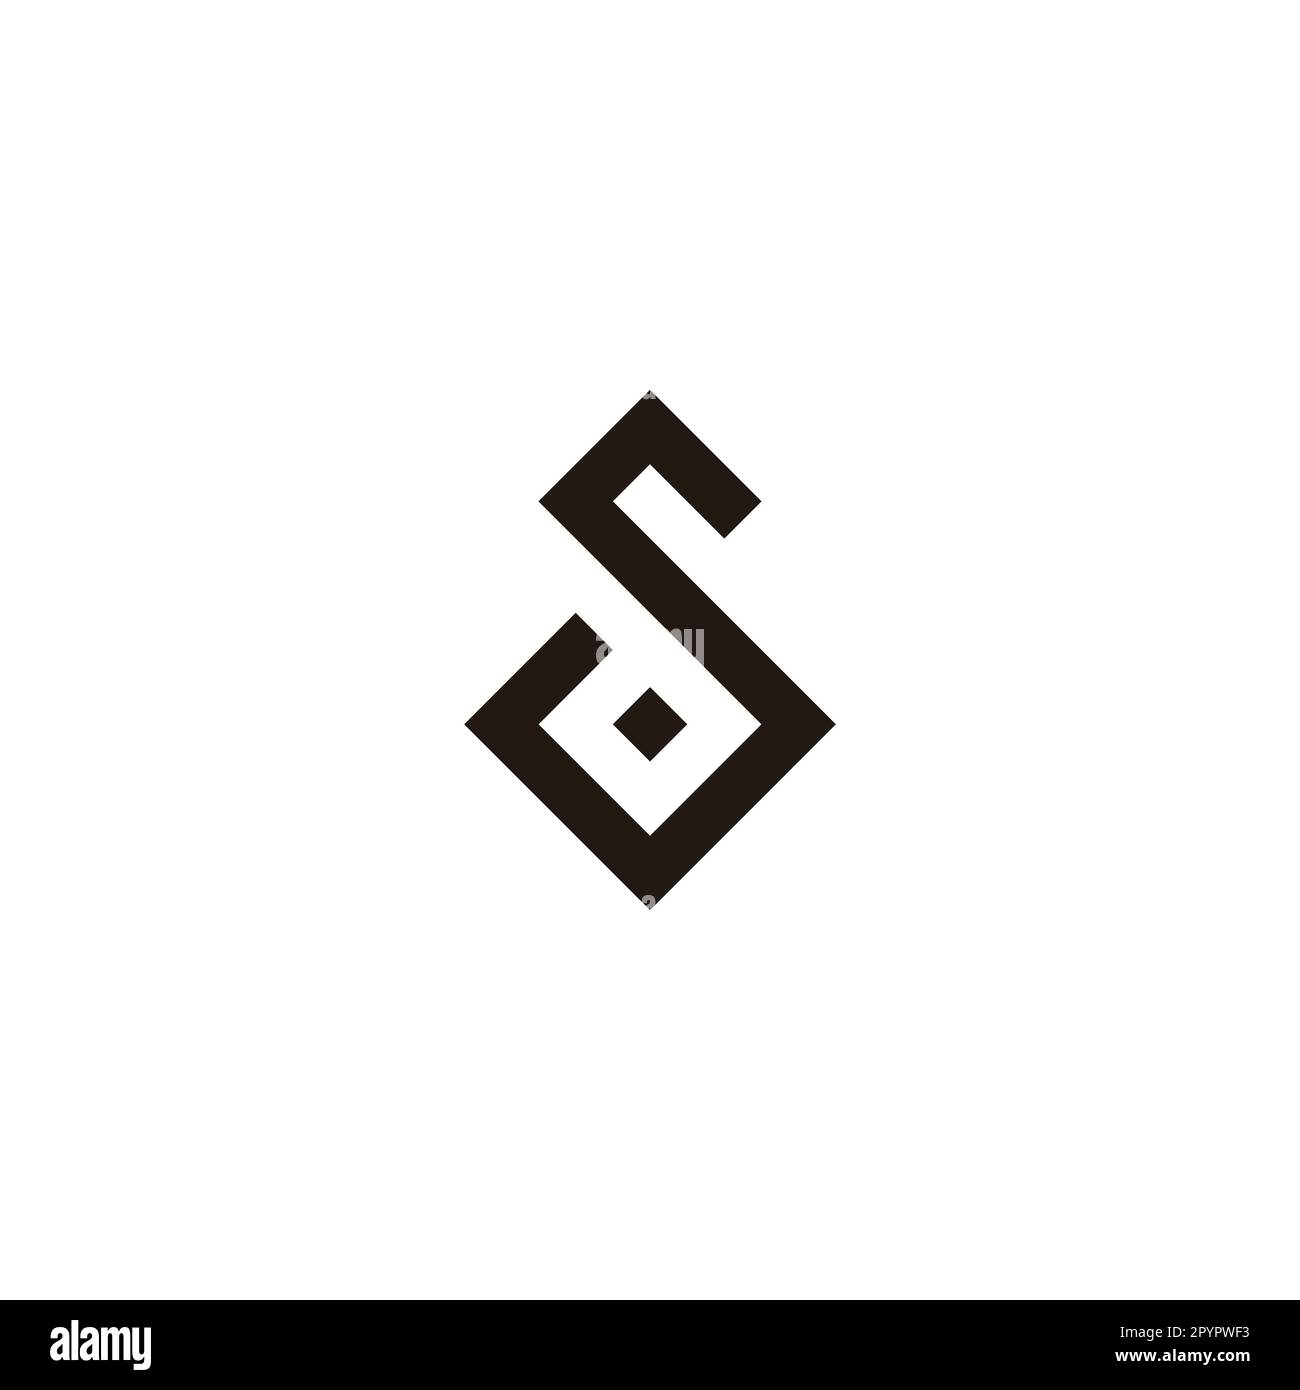 Letter Sd dS S d square, elegant geometric symbol simple logo vector Stock Vector